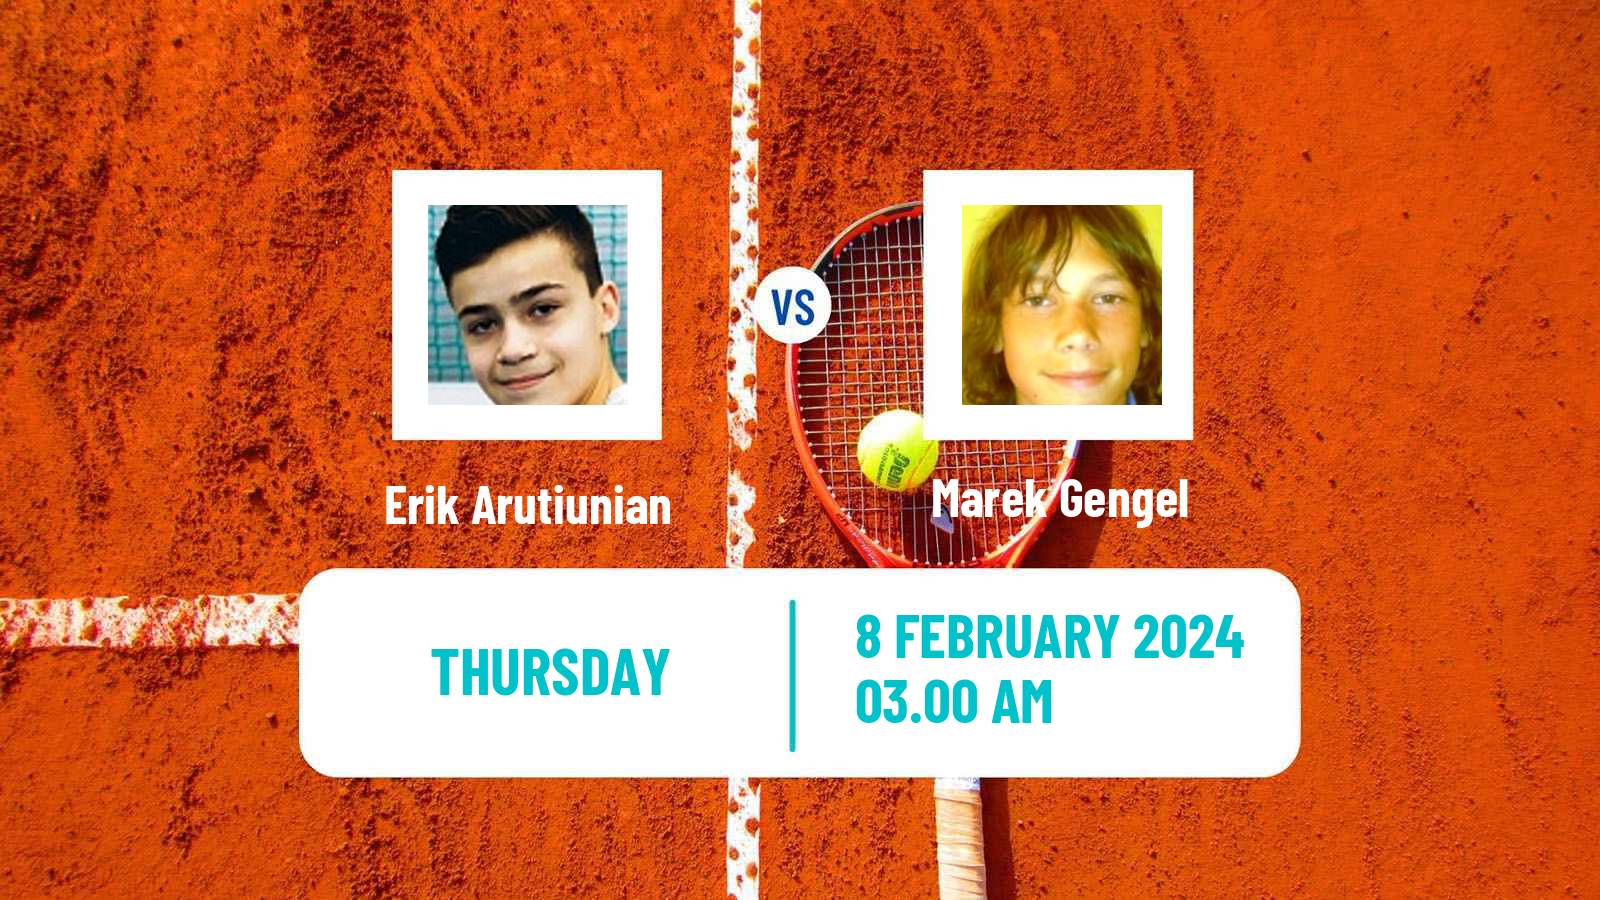 Tennis ITF M15 Sharm Elsheikh 2 Men Erik Arutiunian - Marek Gengel